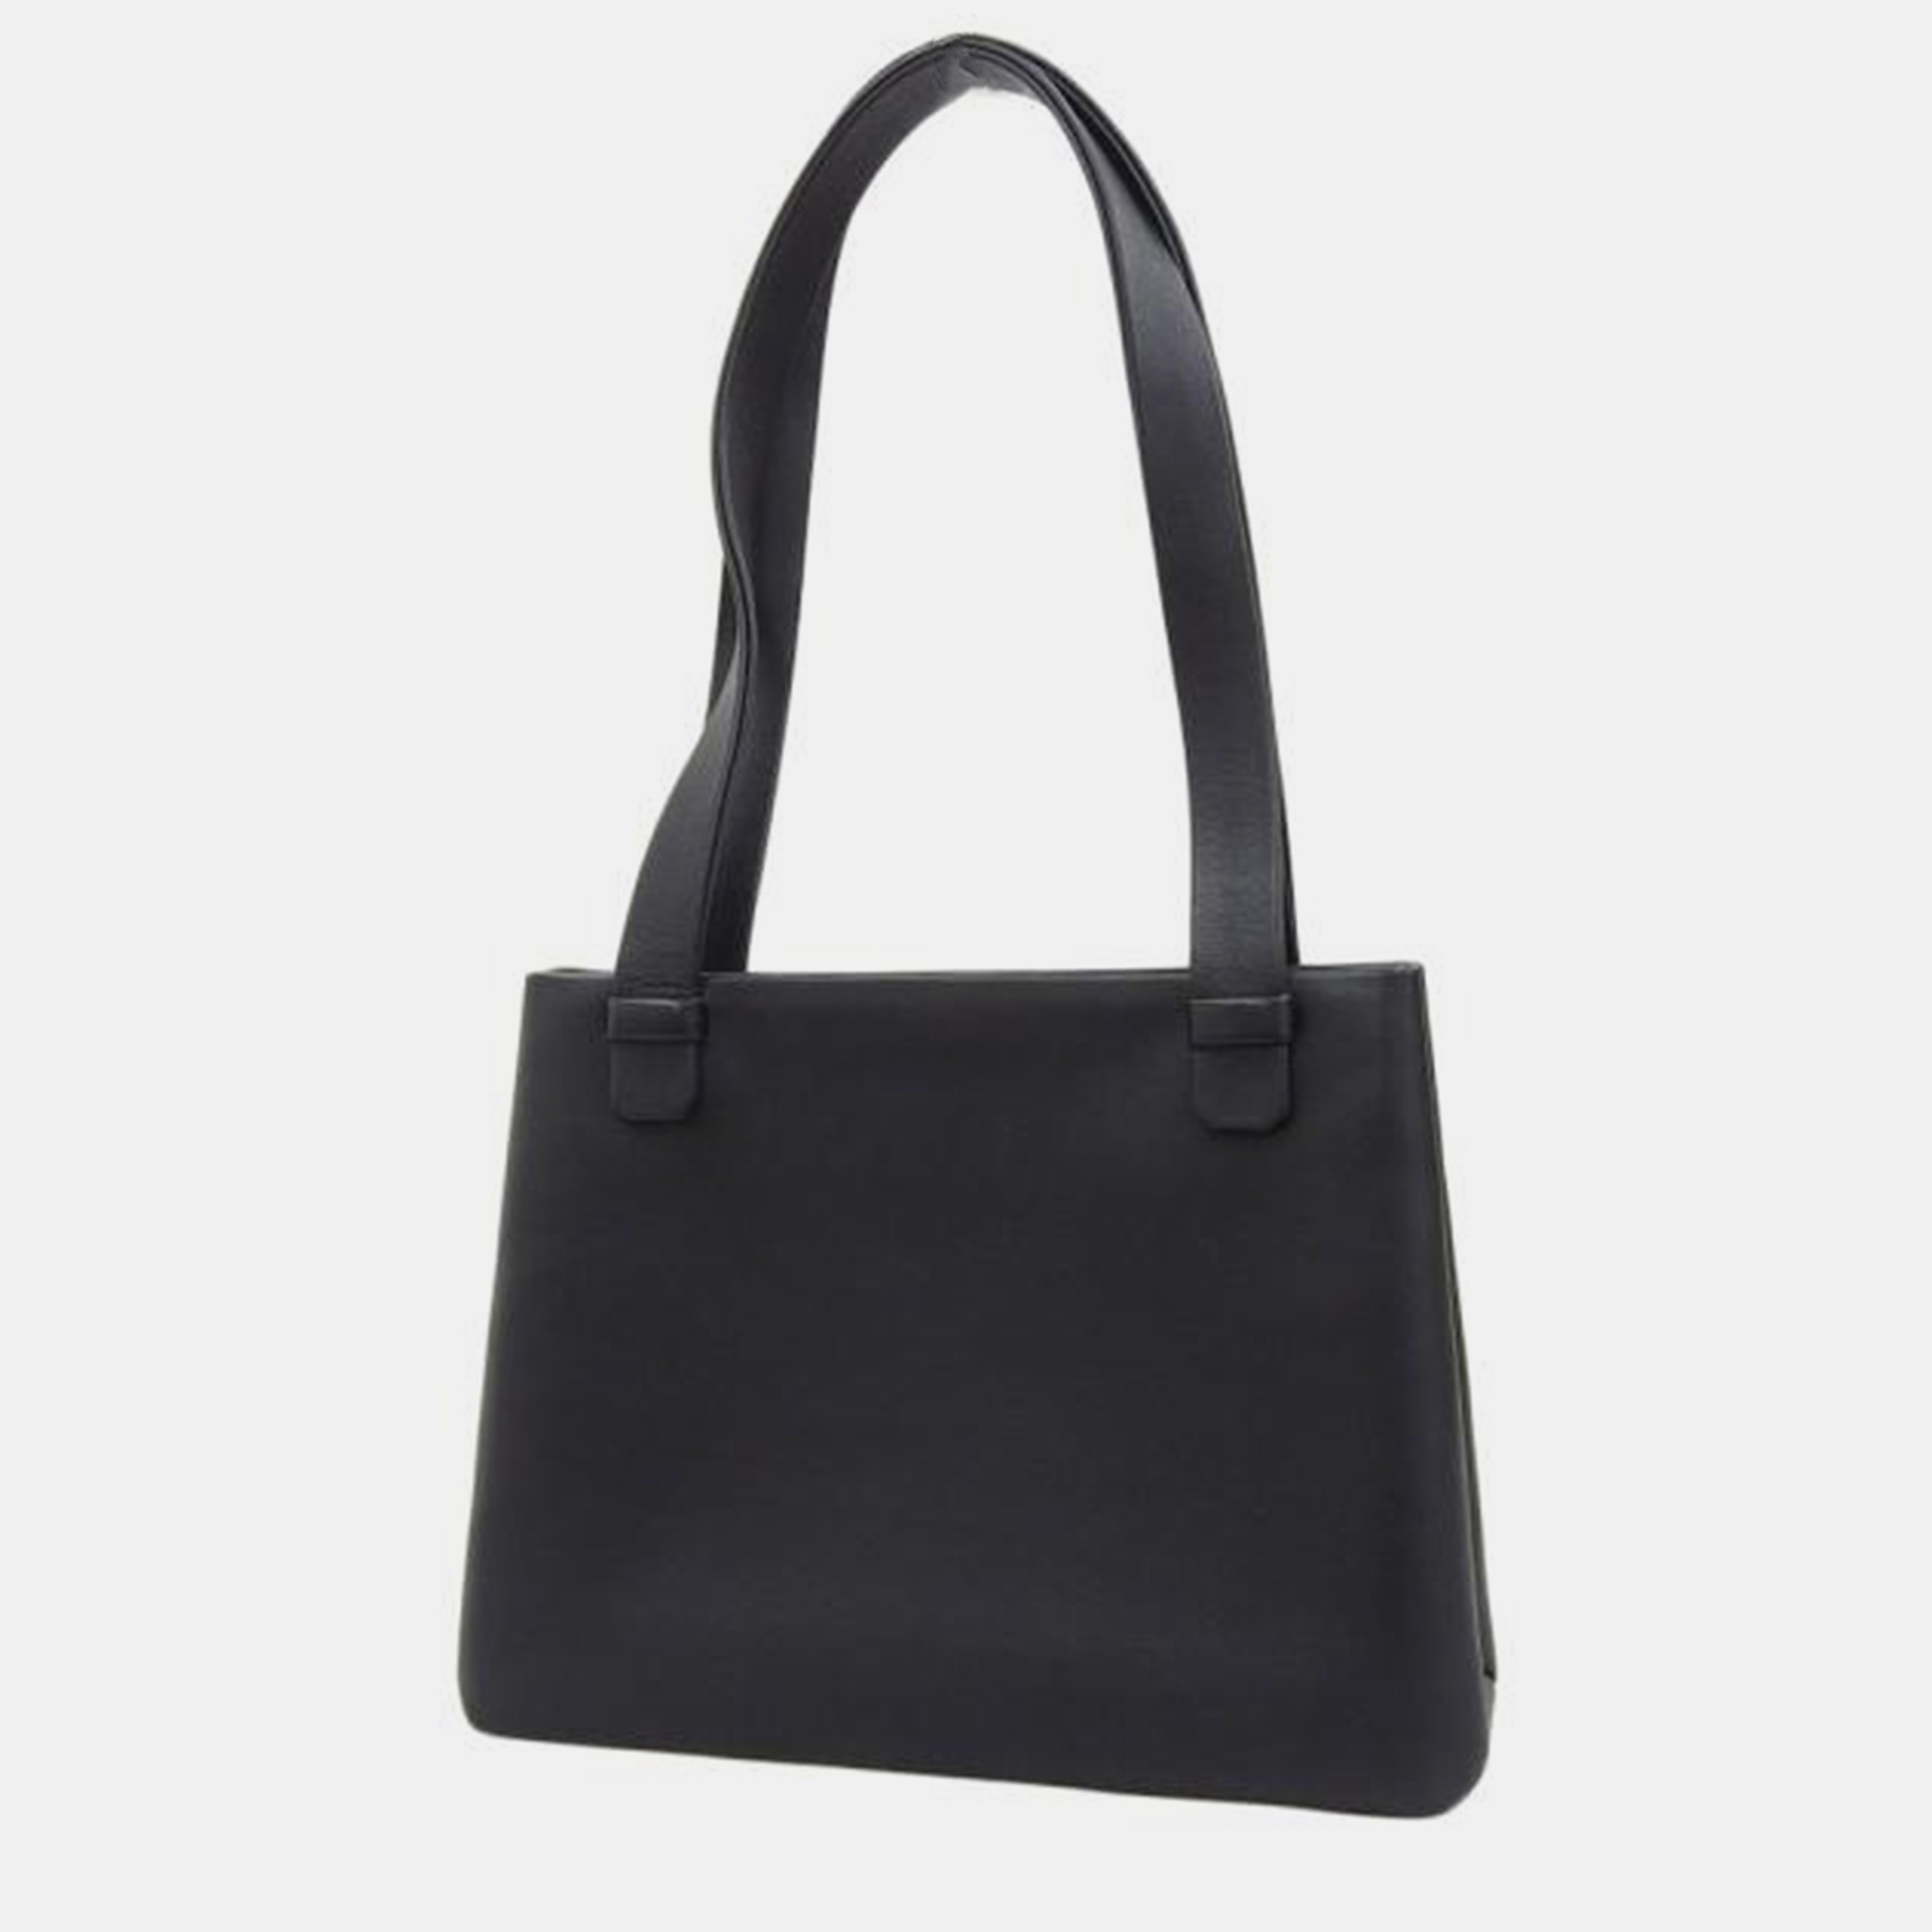 Chanel black leather logo tote bag